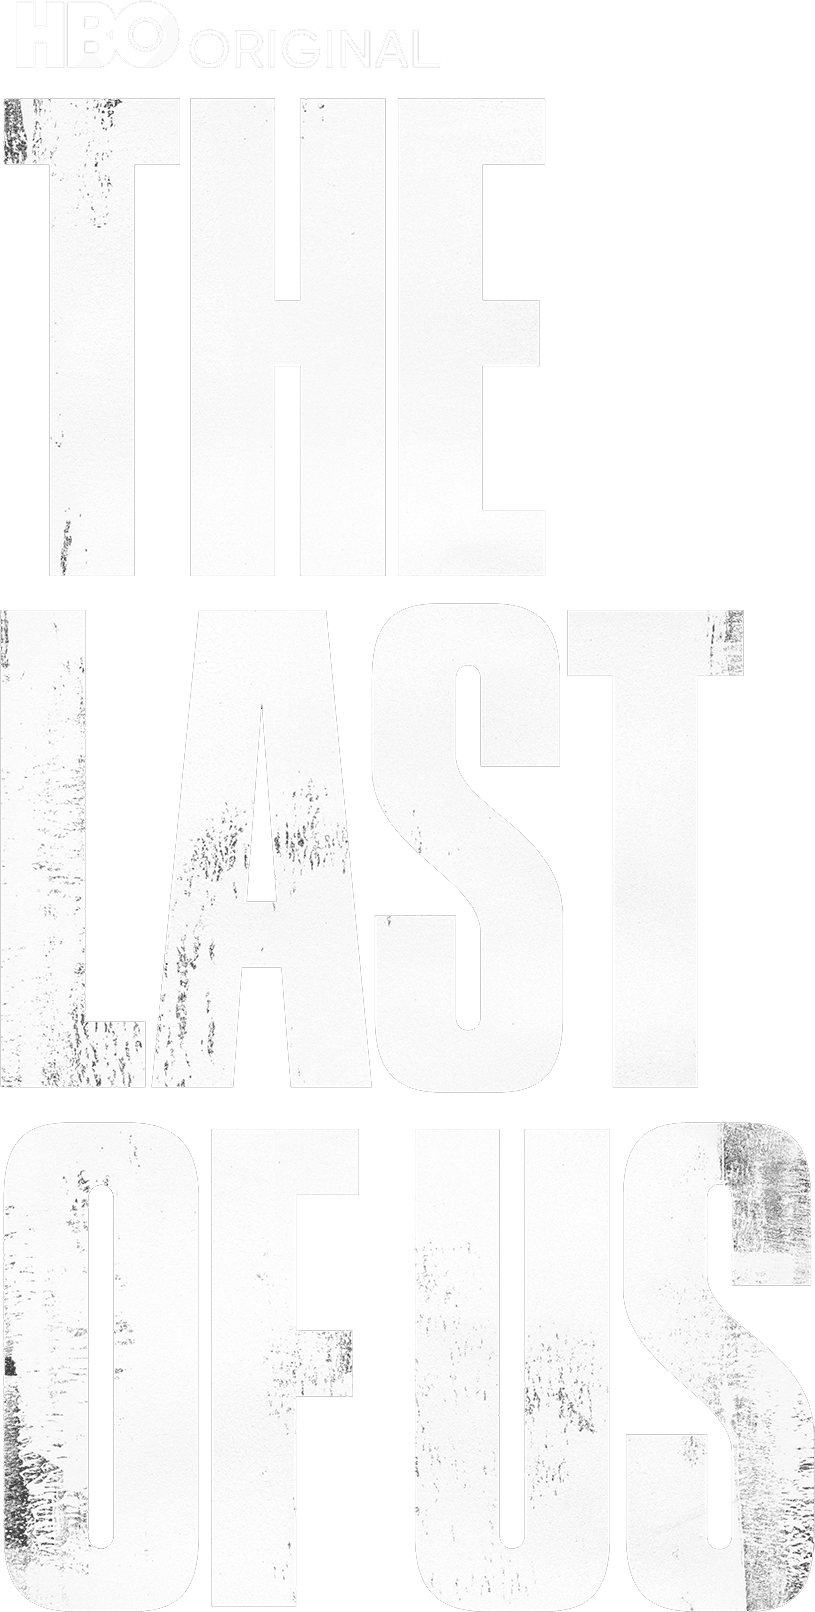 The Last of Us logo